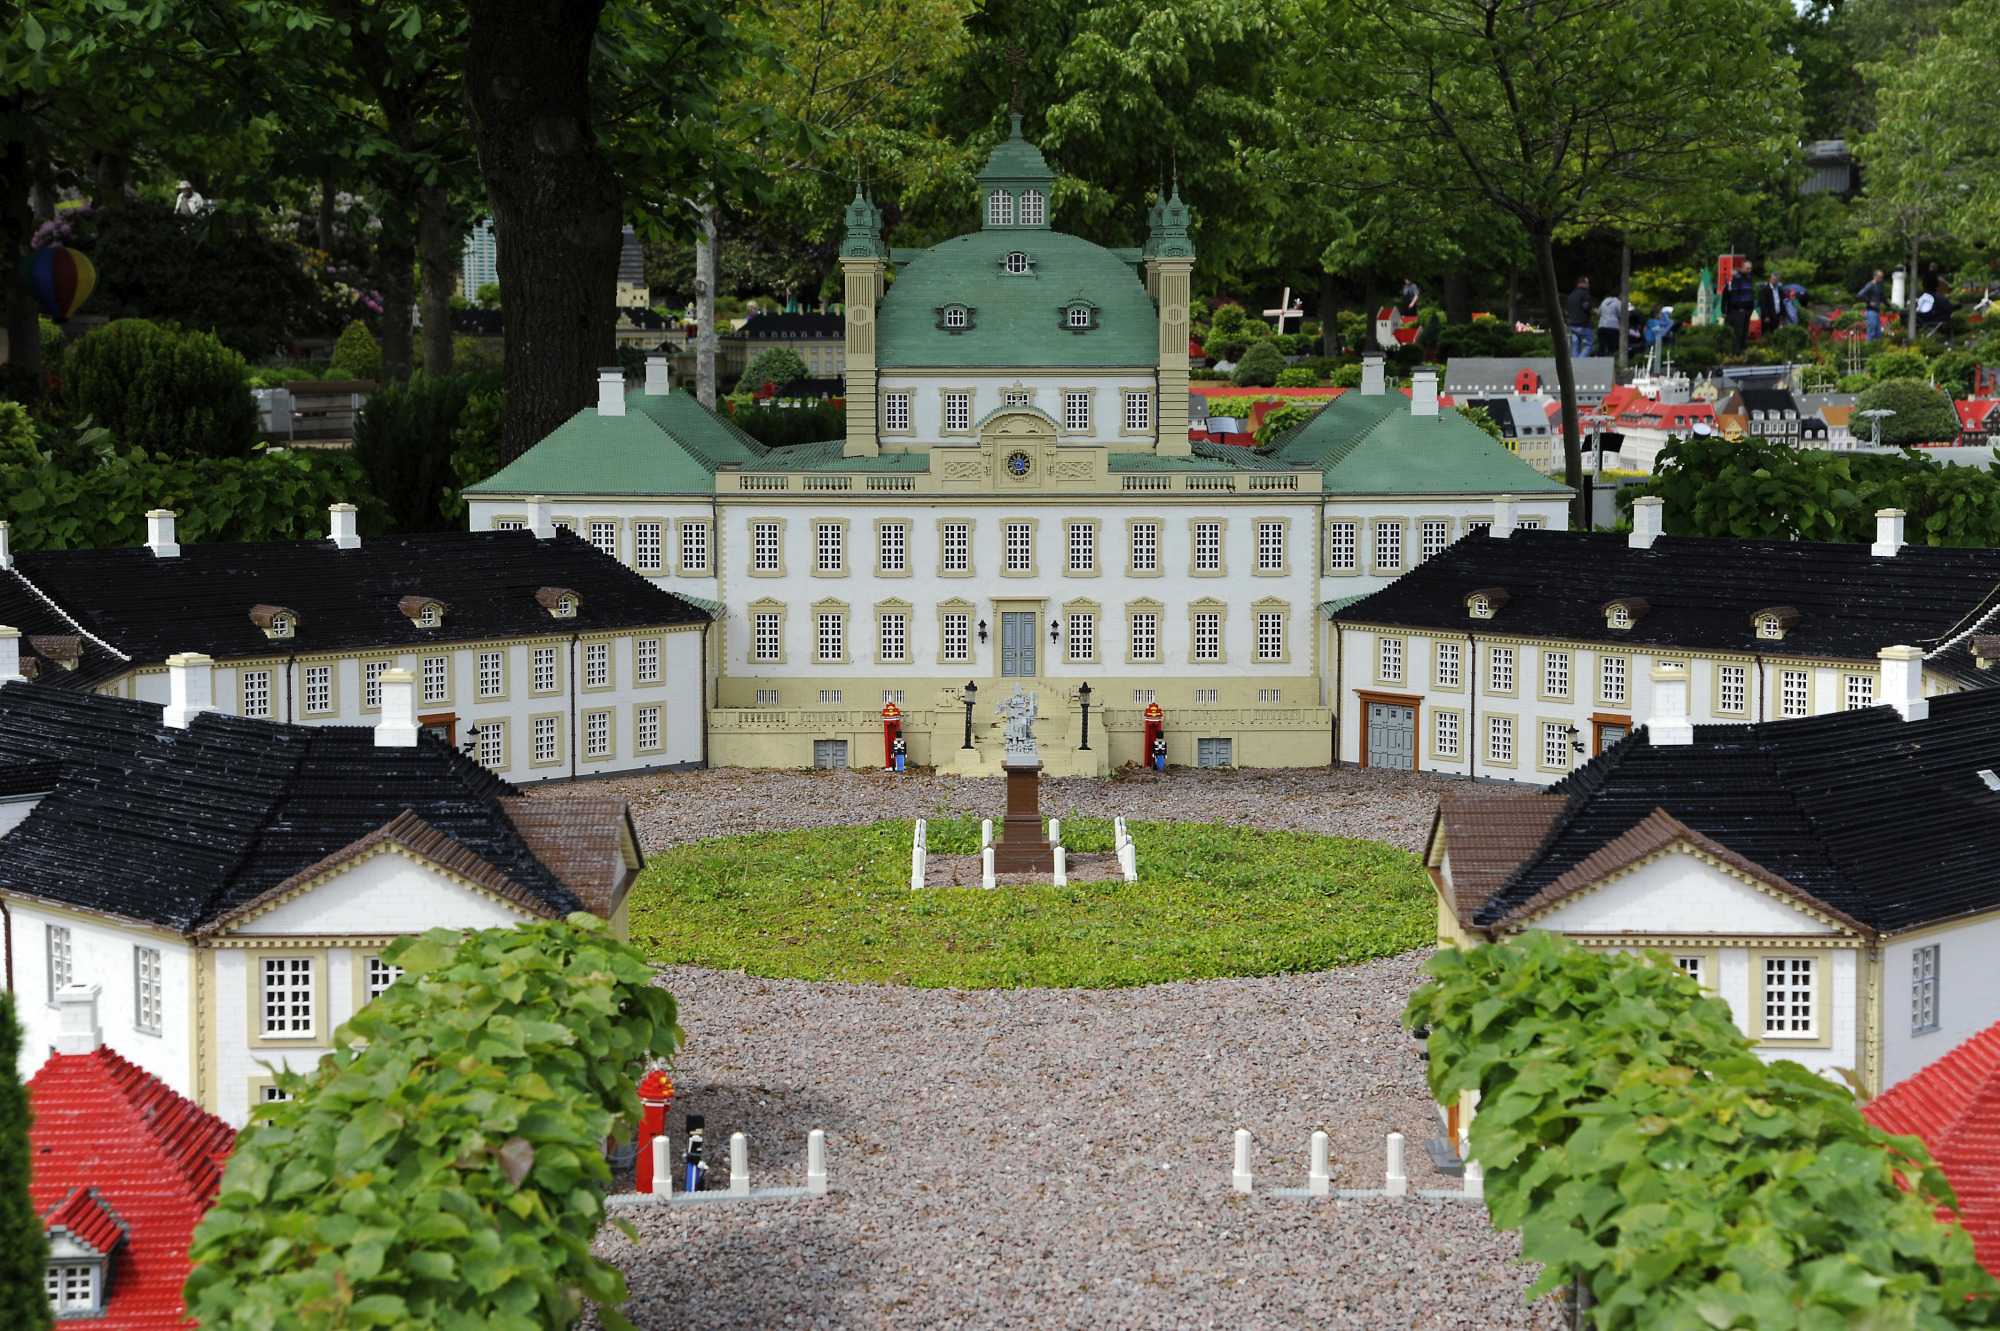 Legoland - Fredensborg | Legoland | Pictures | Denmark in ...